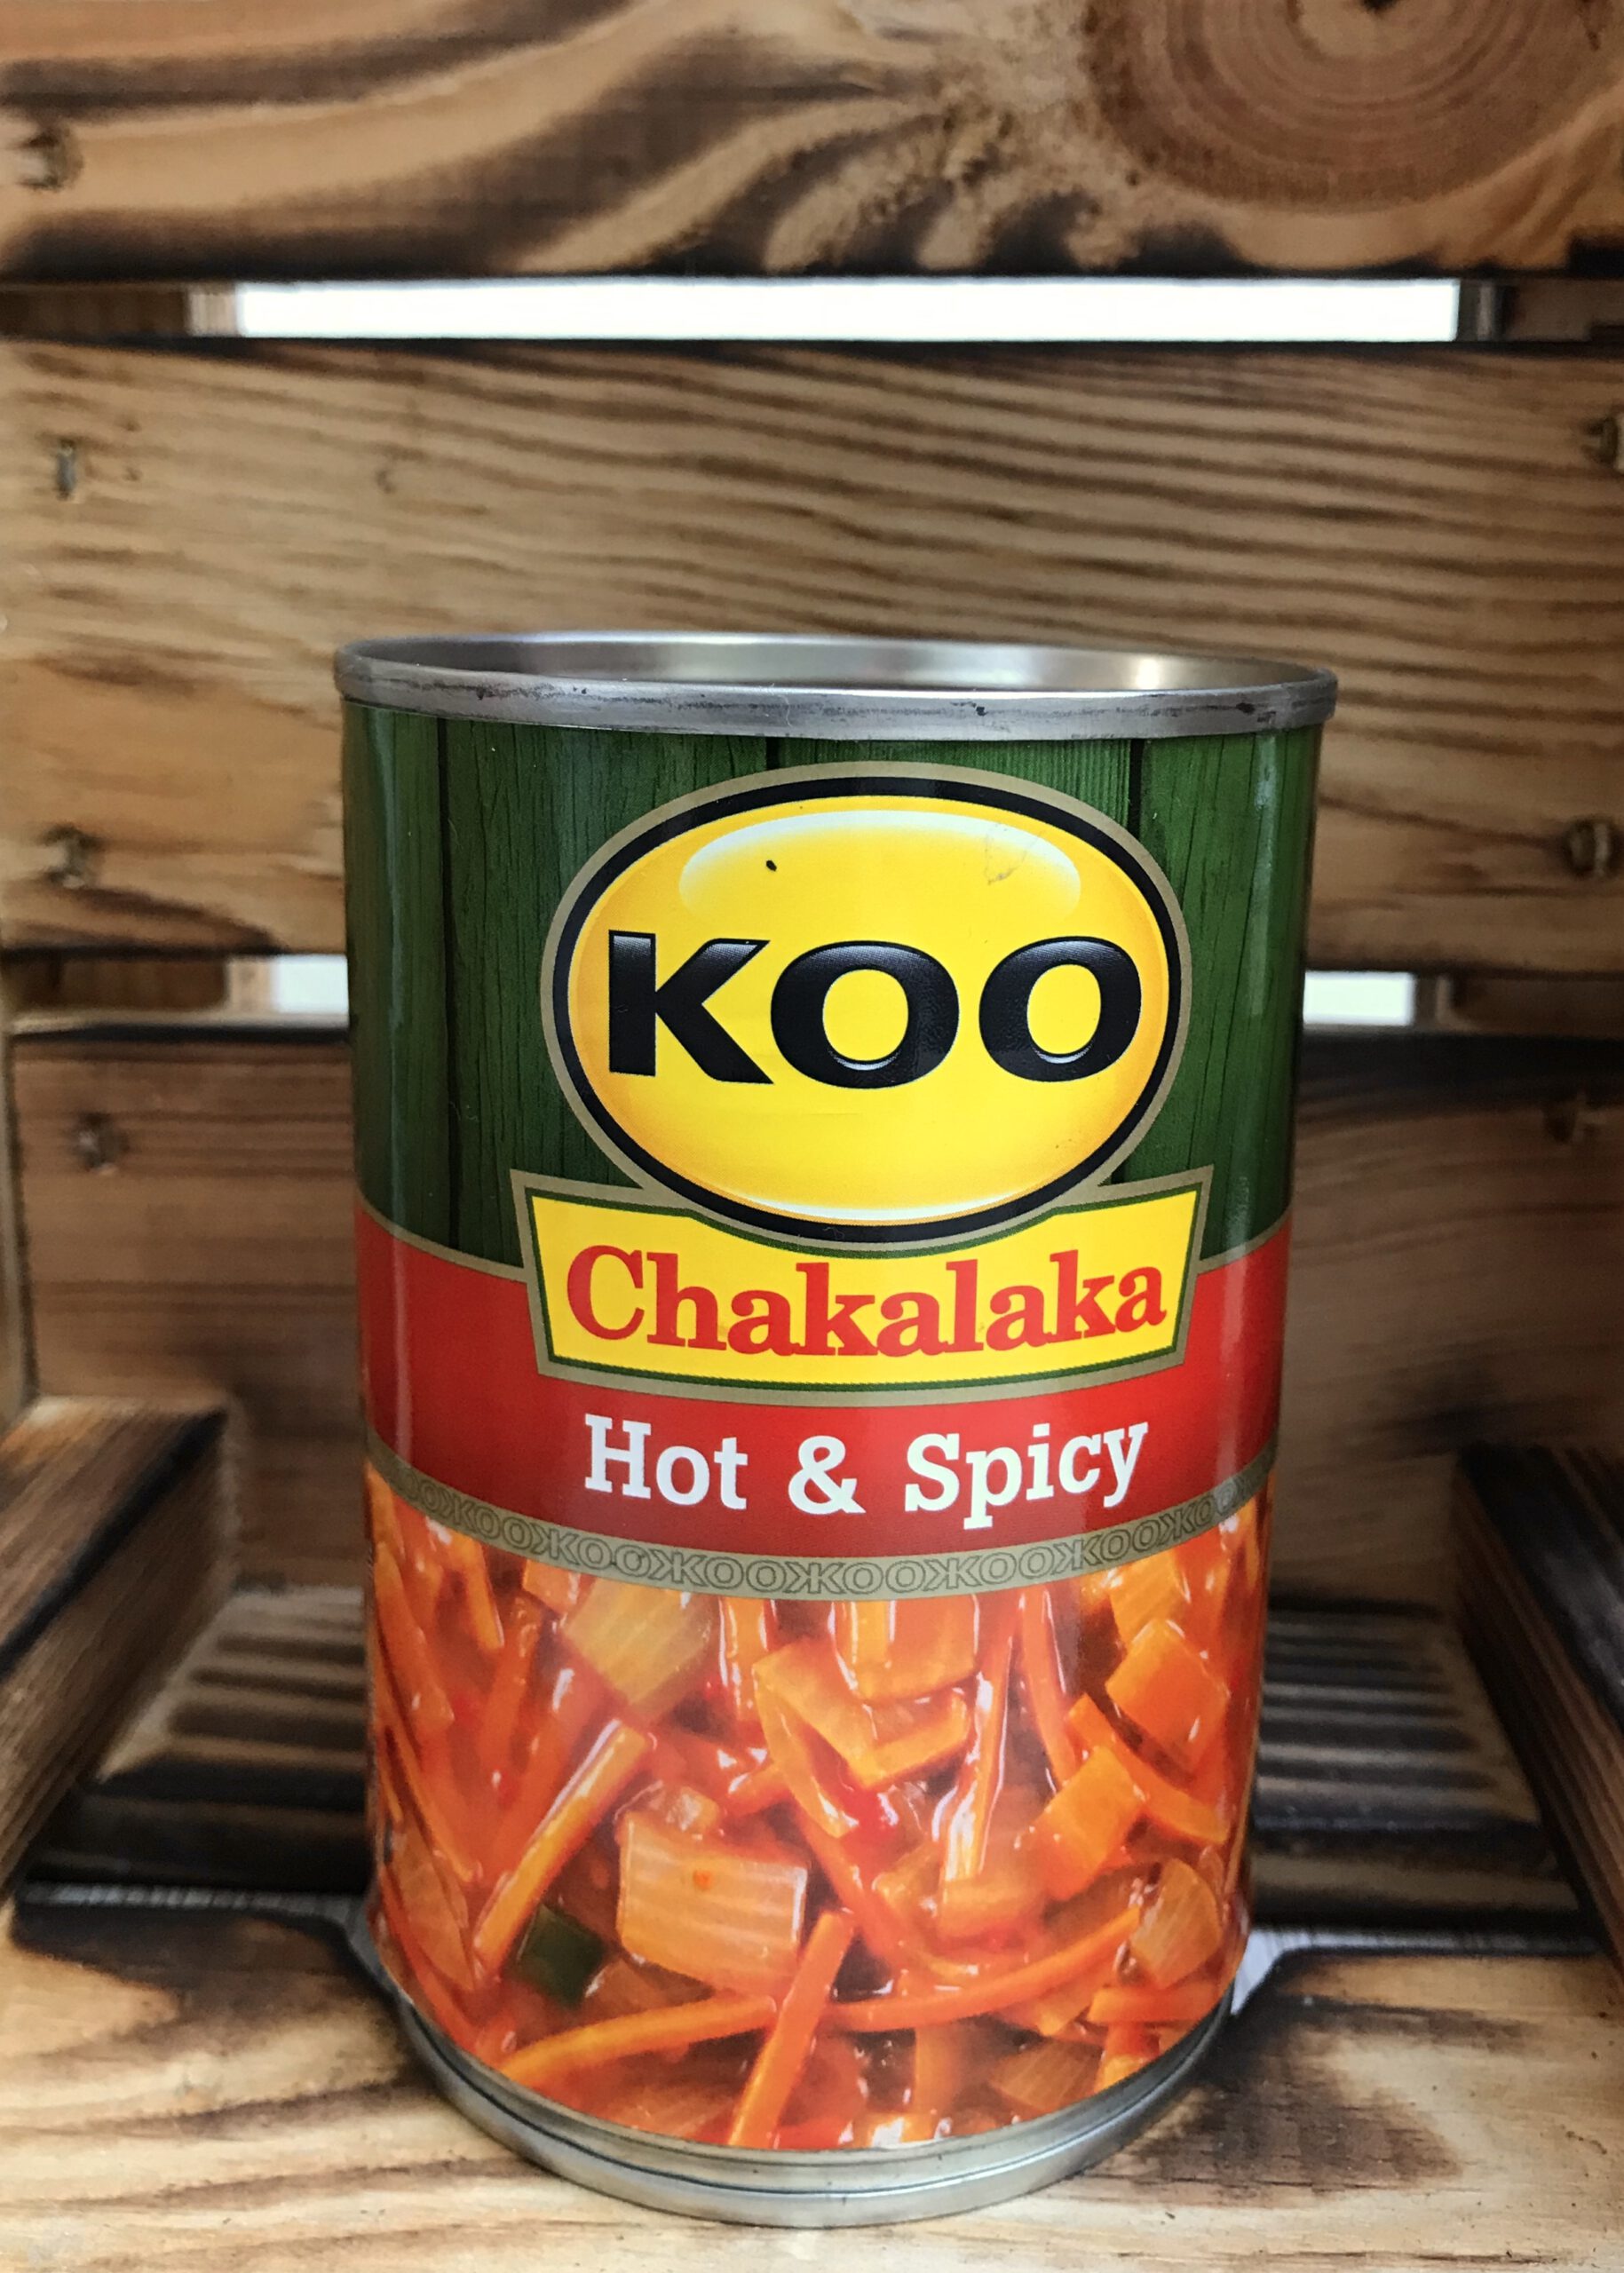 Koo Chakalaka Hot Spicy 410g Can Not Too Hot Baie Lekker New Stock Arrives Mid April Klein Karoo Biltong More Ian Langridge Neuhausen